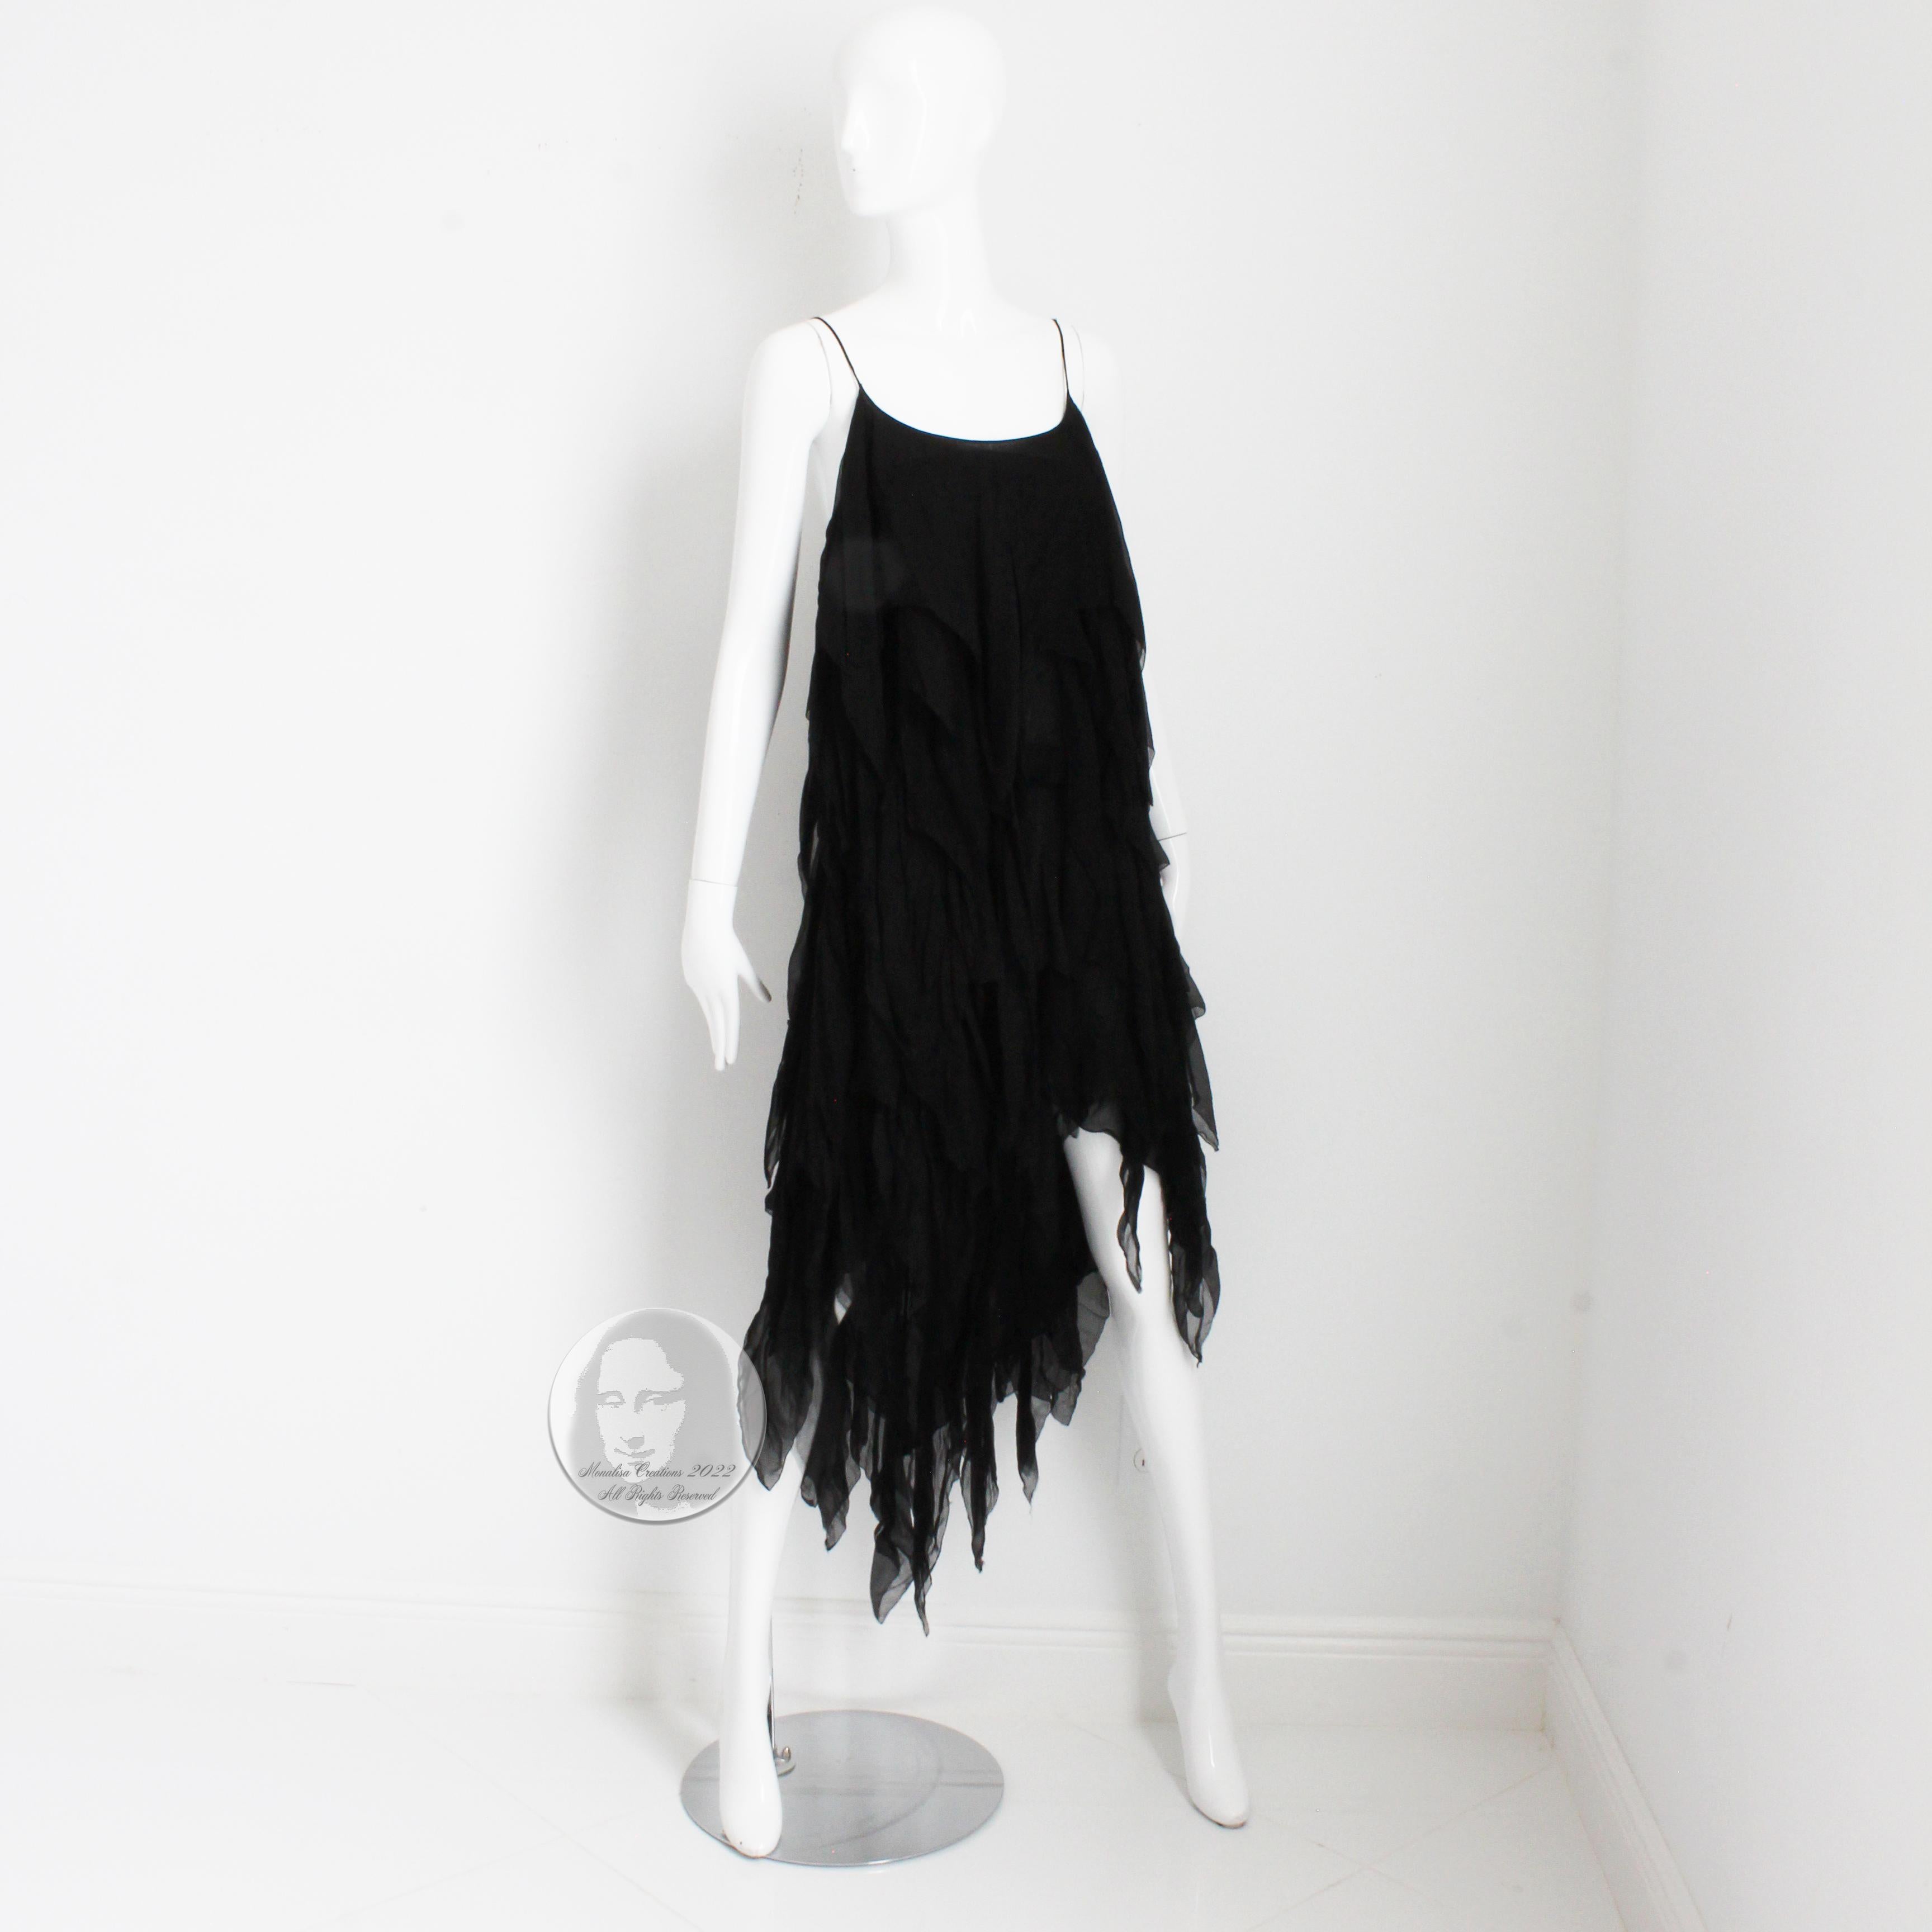 Women's Chanel Dress Black Silk Chiffon Panels Layers LBD Flapper Style Rare 70s 